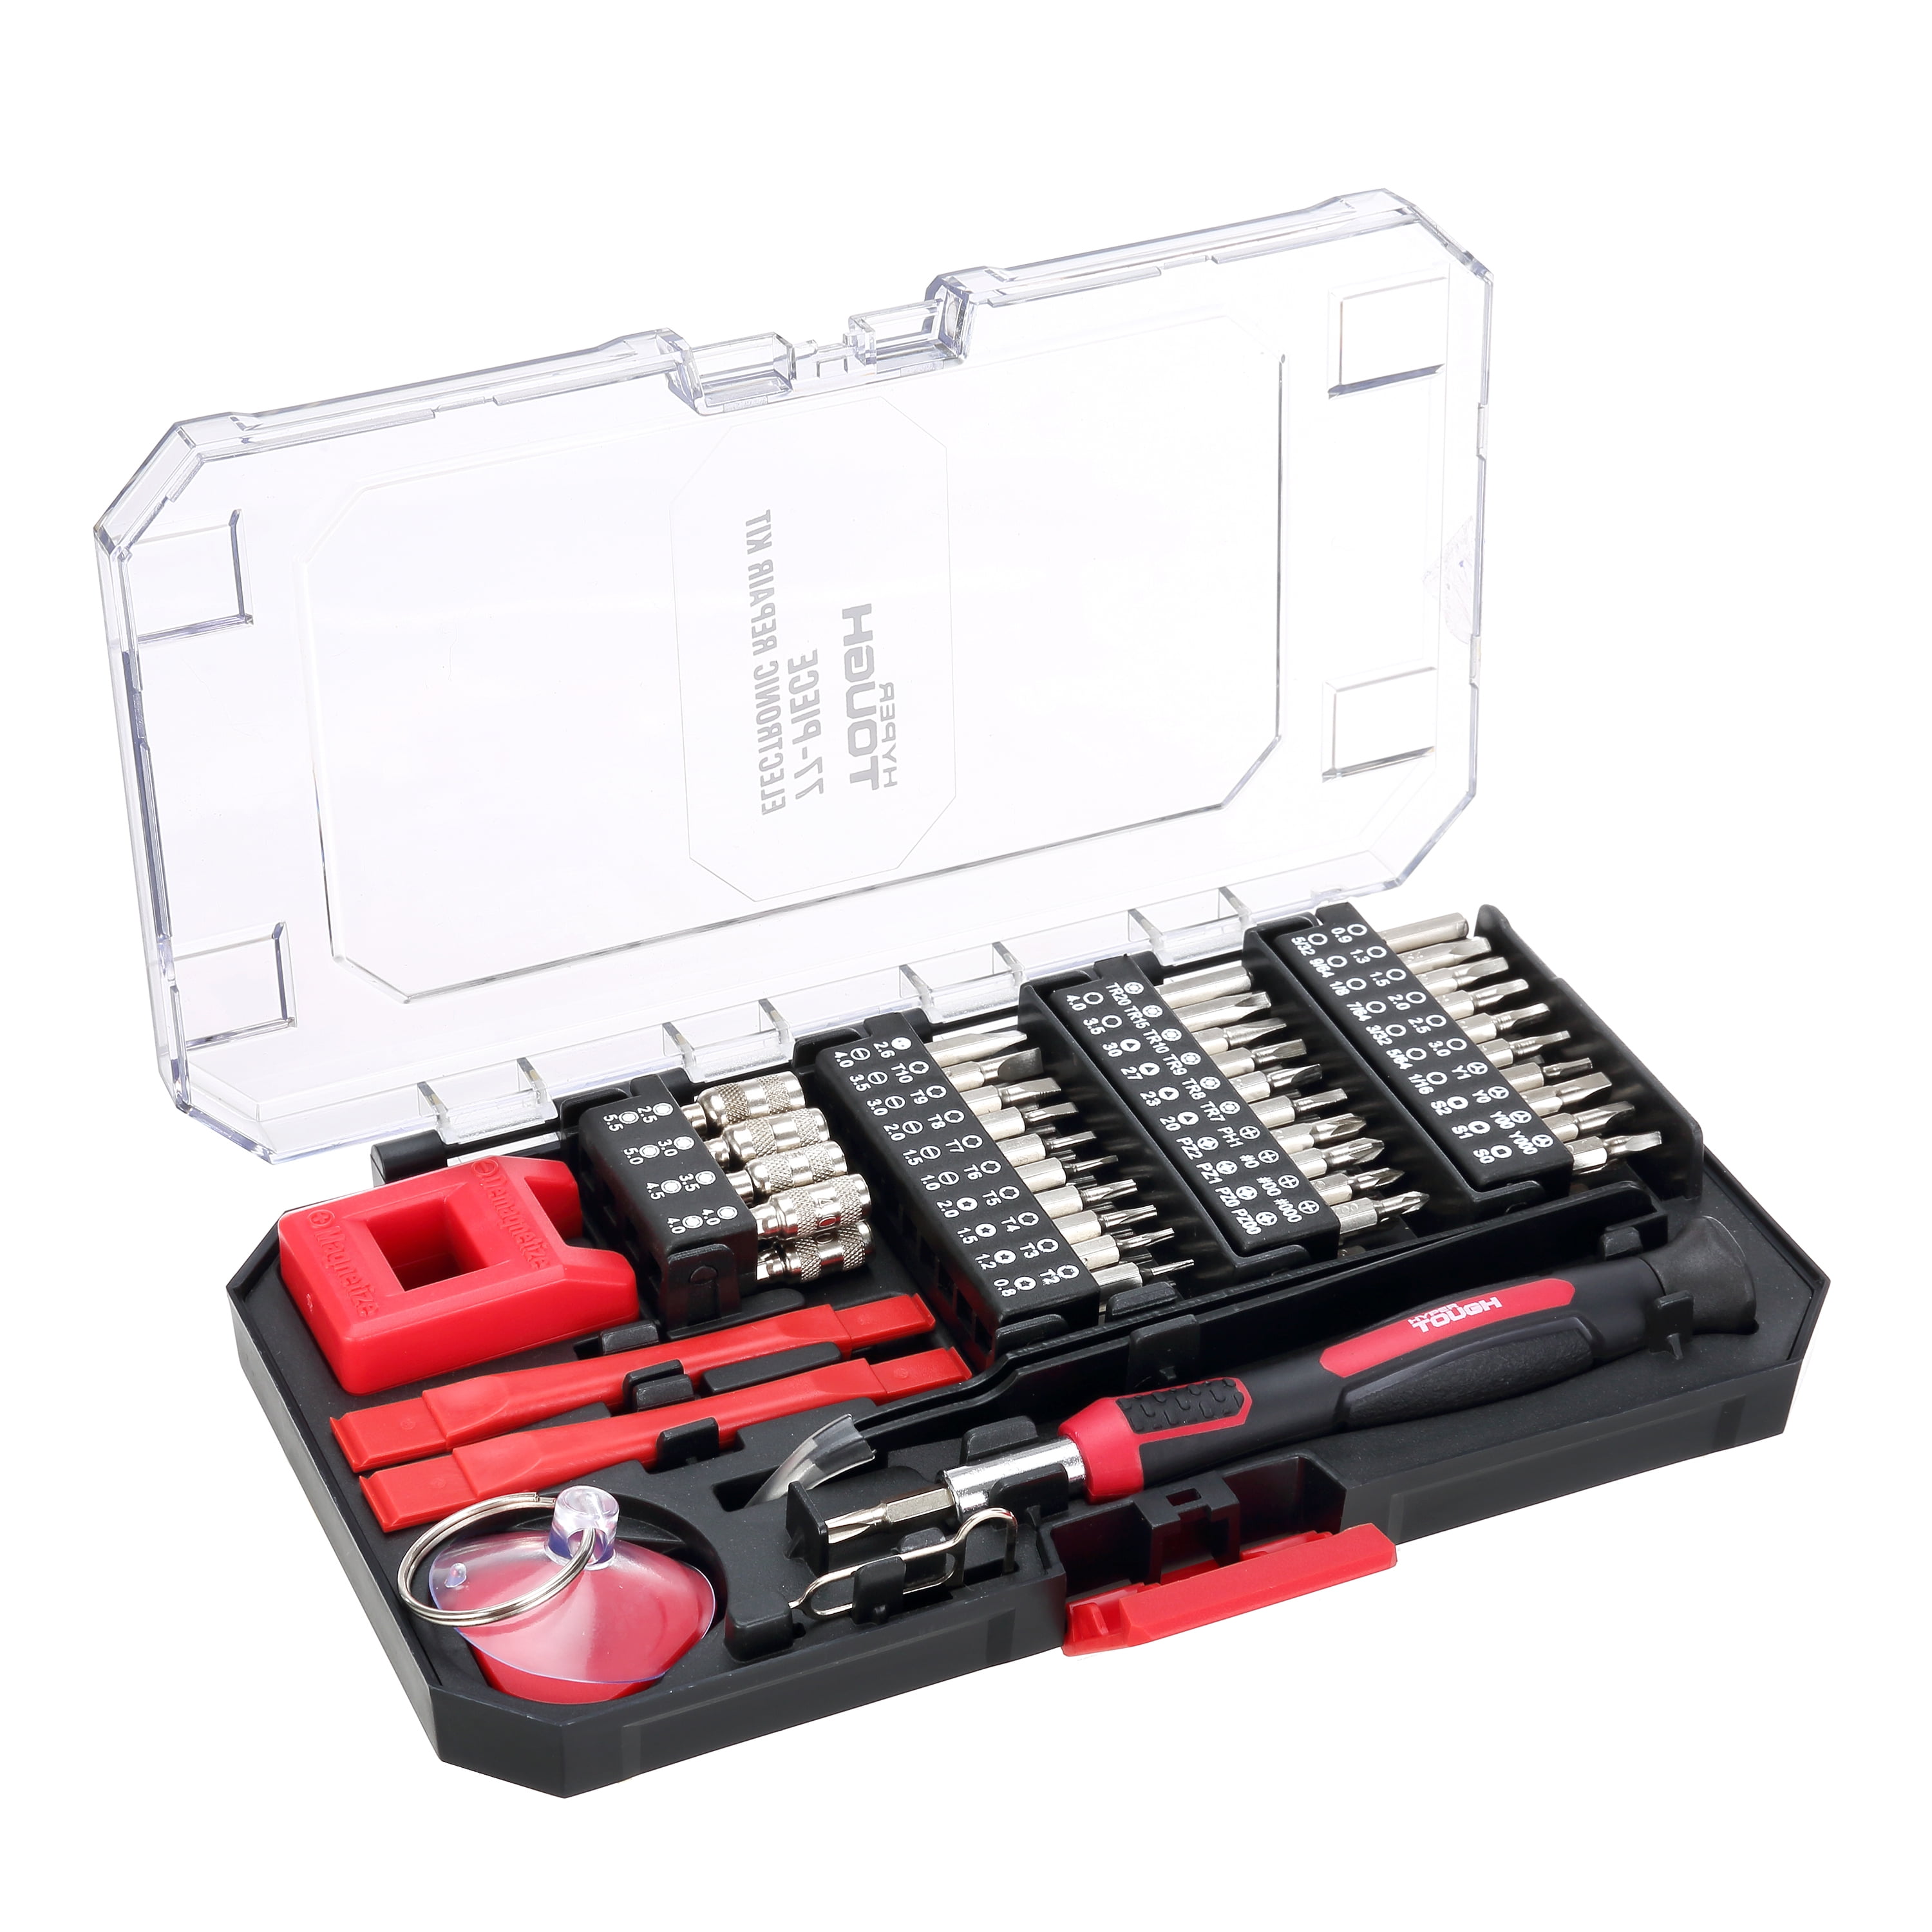 HYPER Tough 77-piece Electronic Repair Kit Ts85147a for sale online 